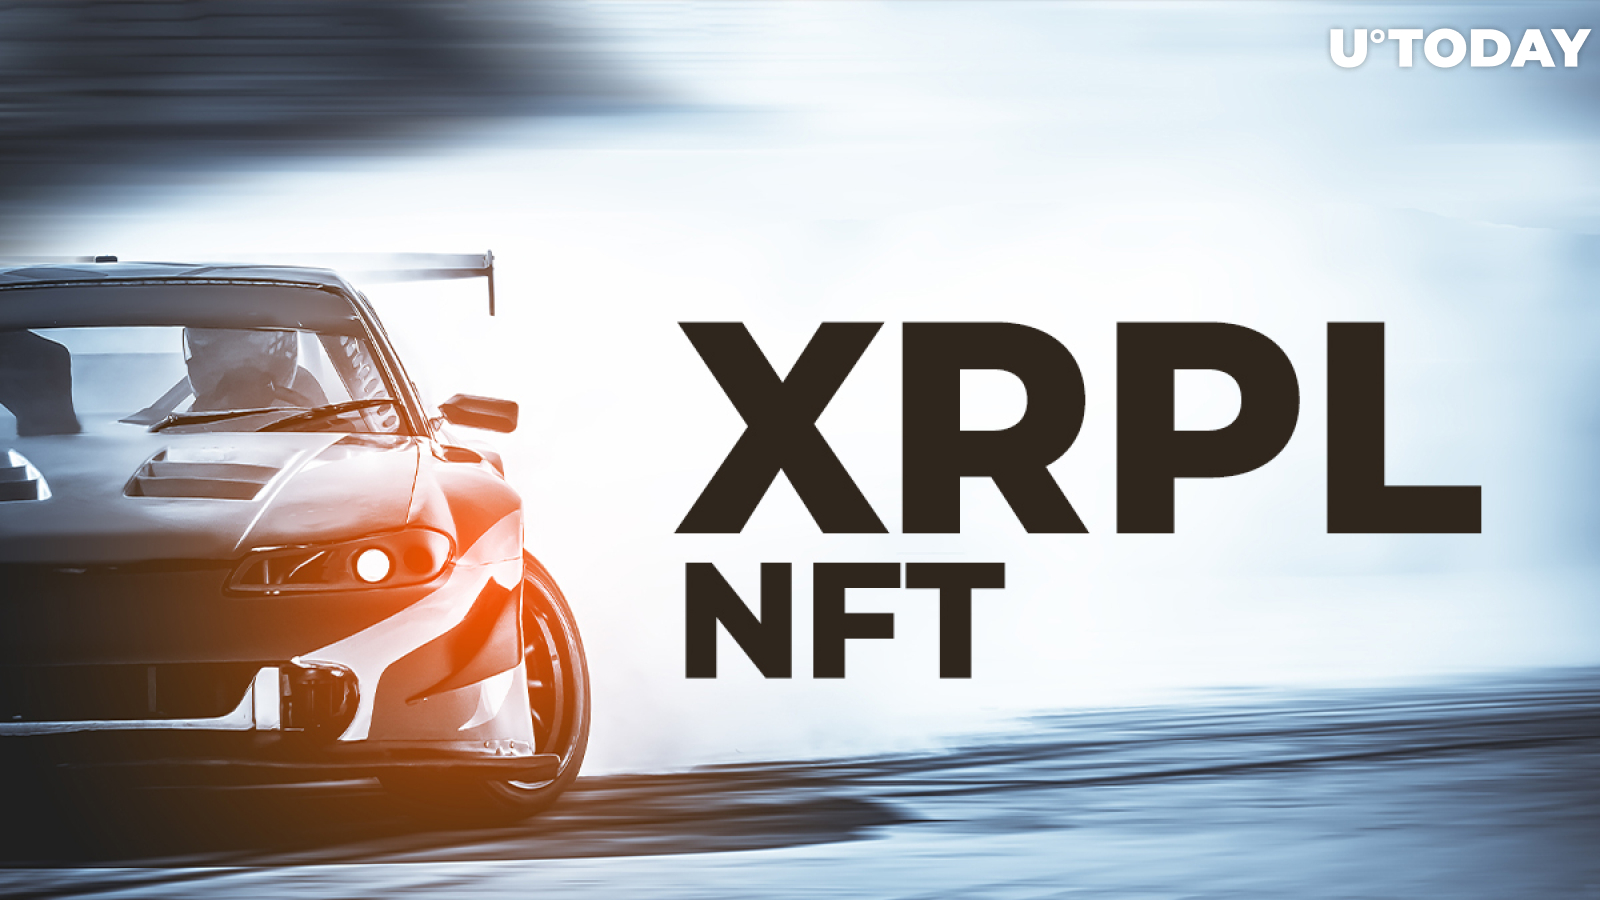 XRPL Ready to Break into NFT Race, Devs Explain How